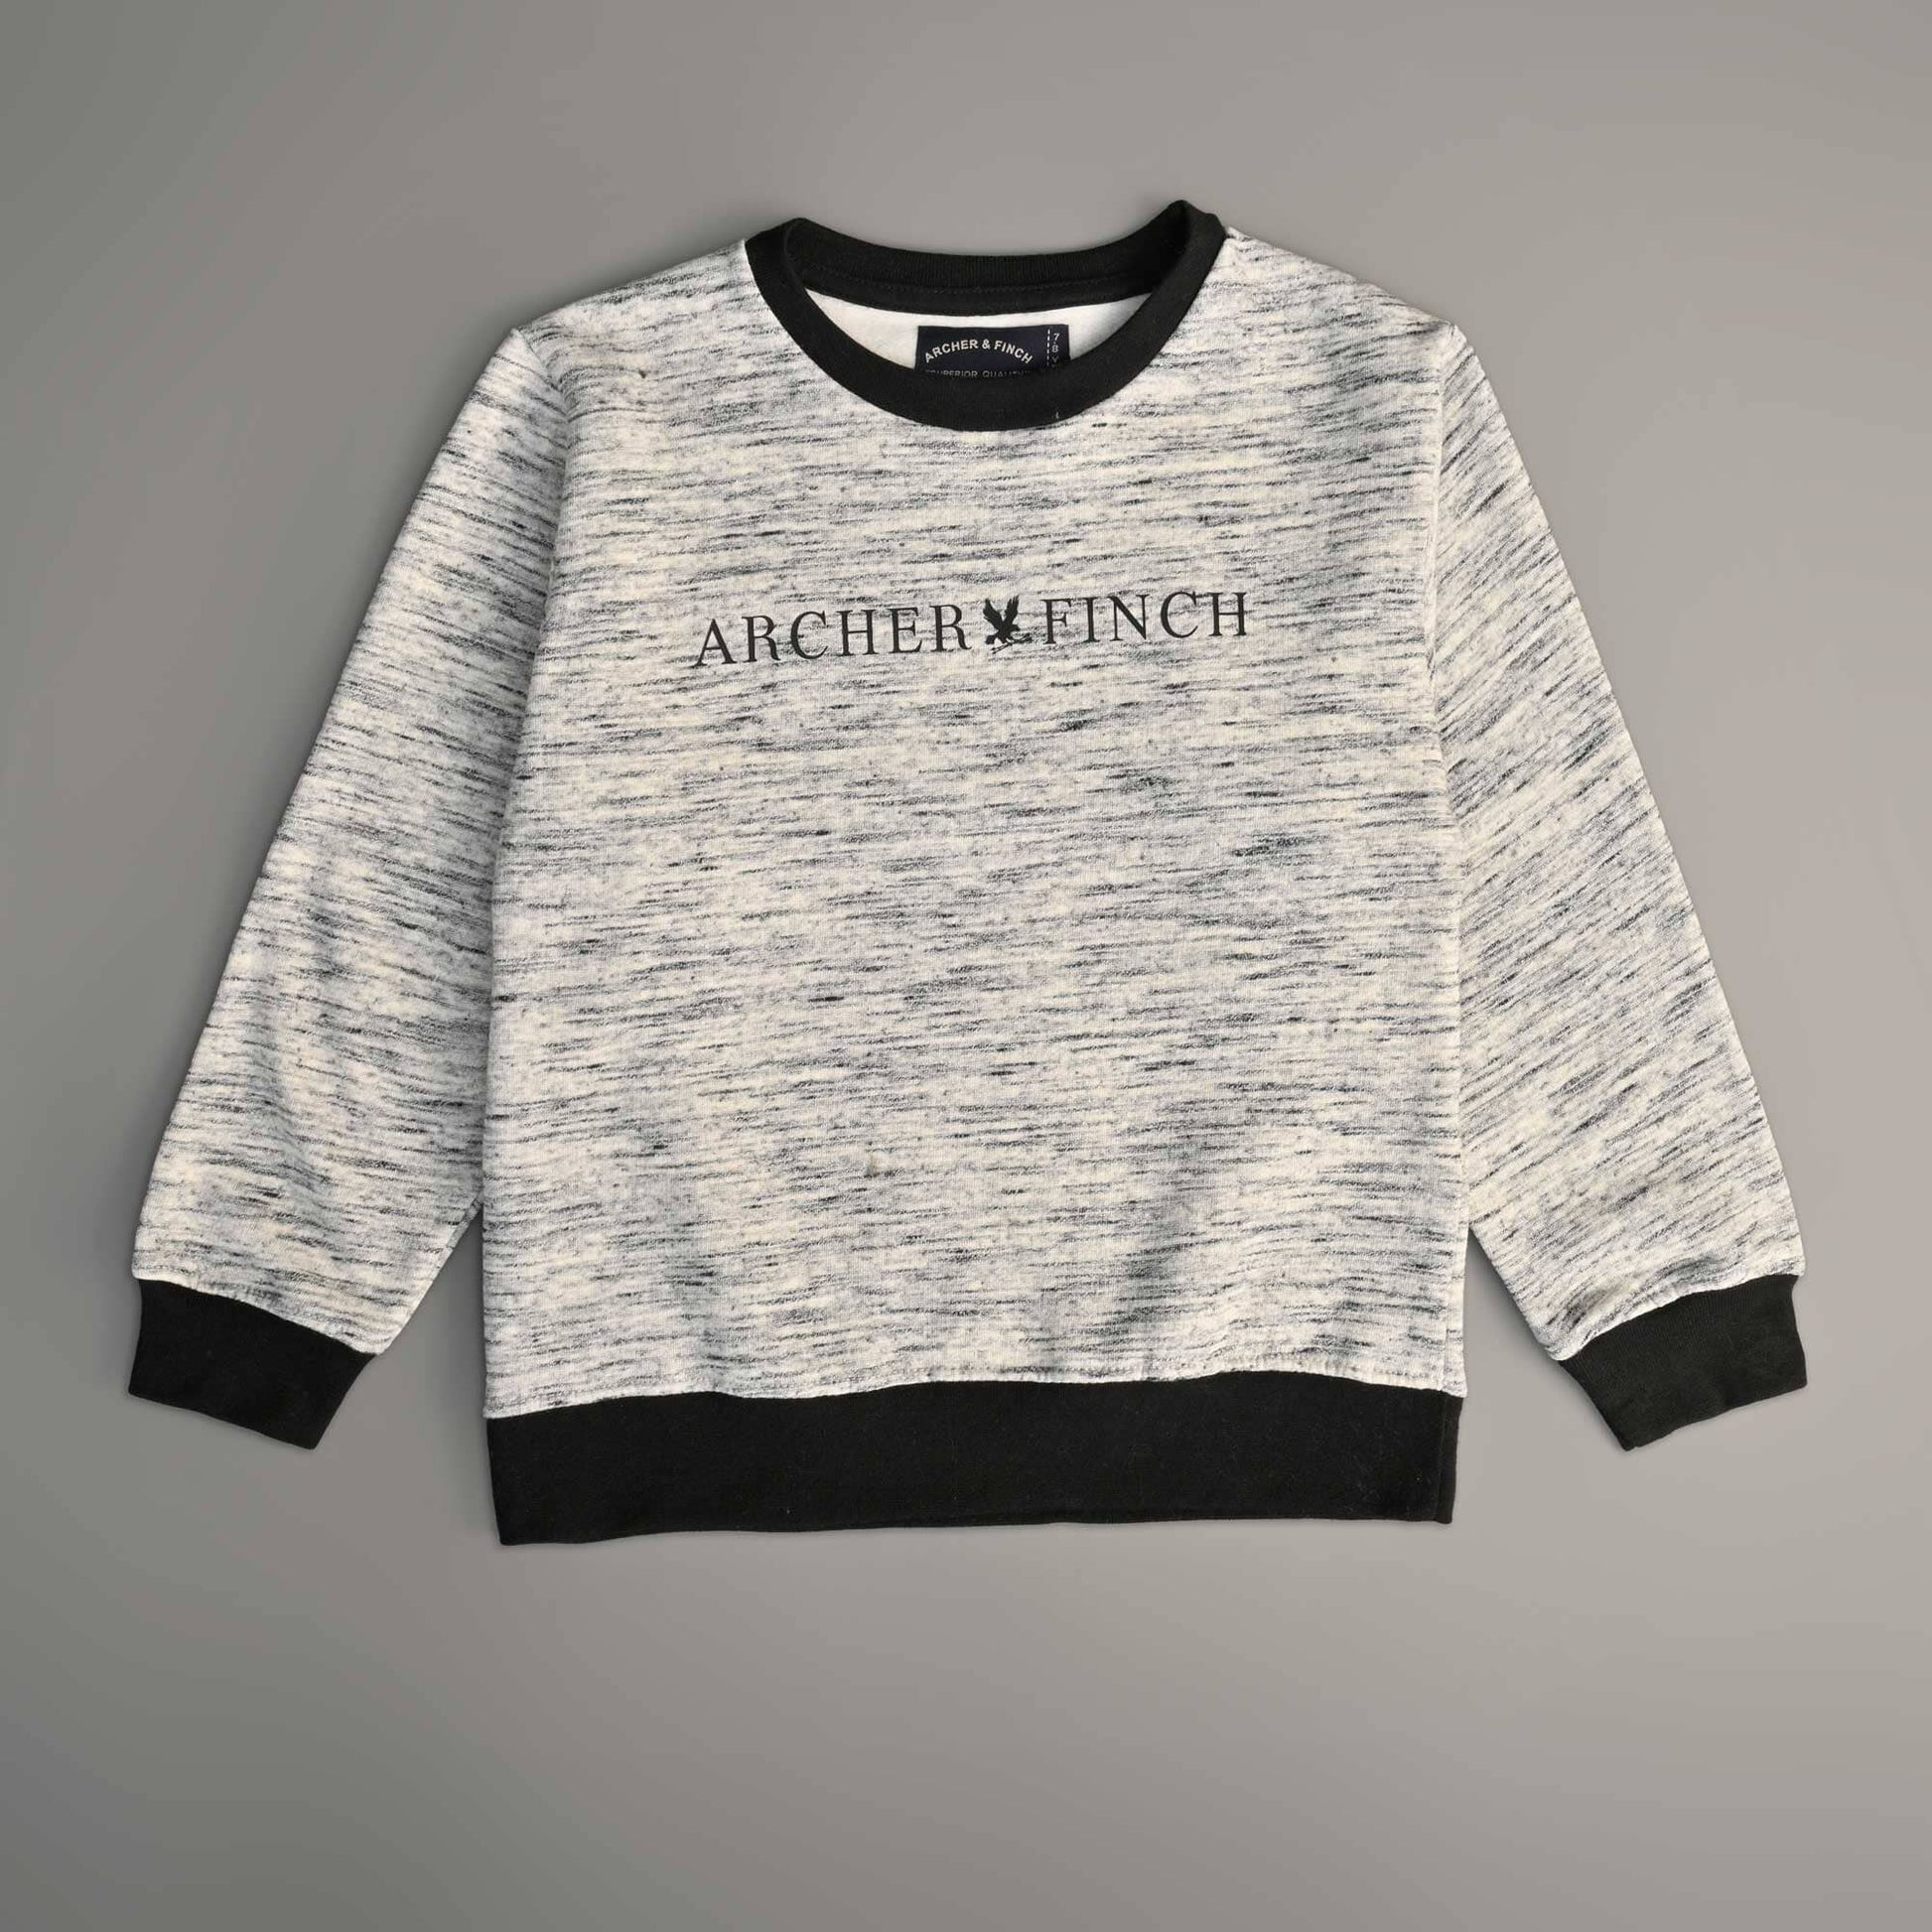 A&F Boy's Archer & Finch Printed Fleece Sweat Shirt Boy's Sweat Shirt LFS Melange grey 3-4 Years 